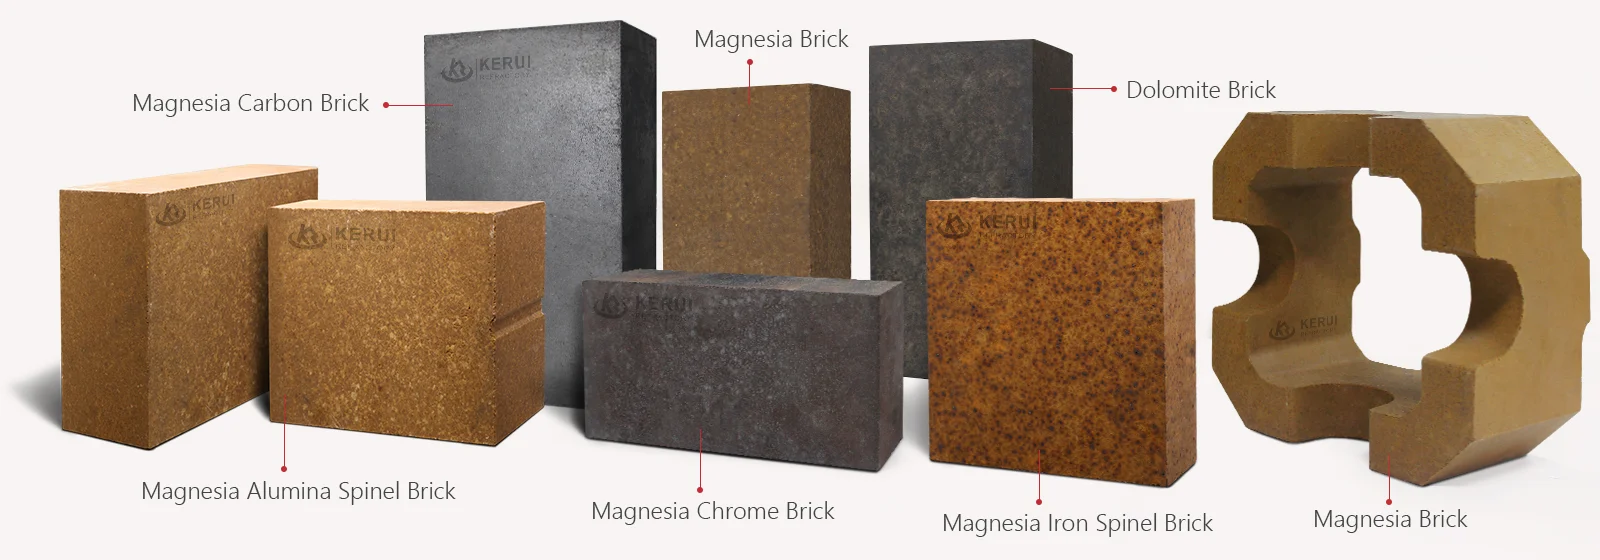 KERUI Magnesia Brick